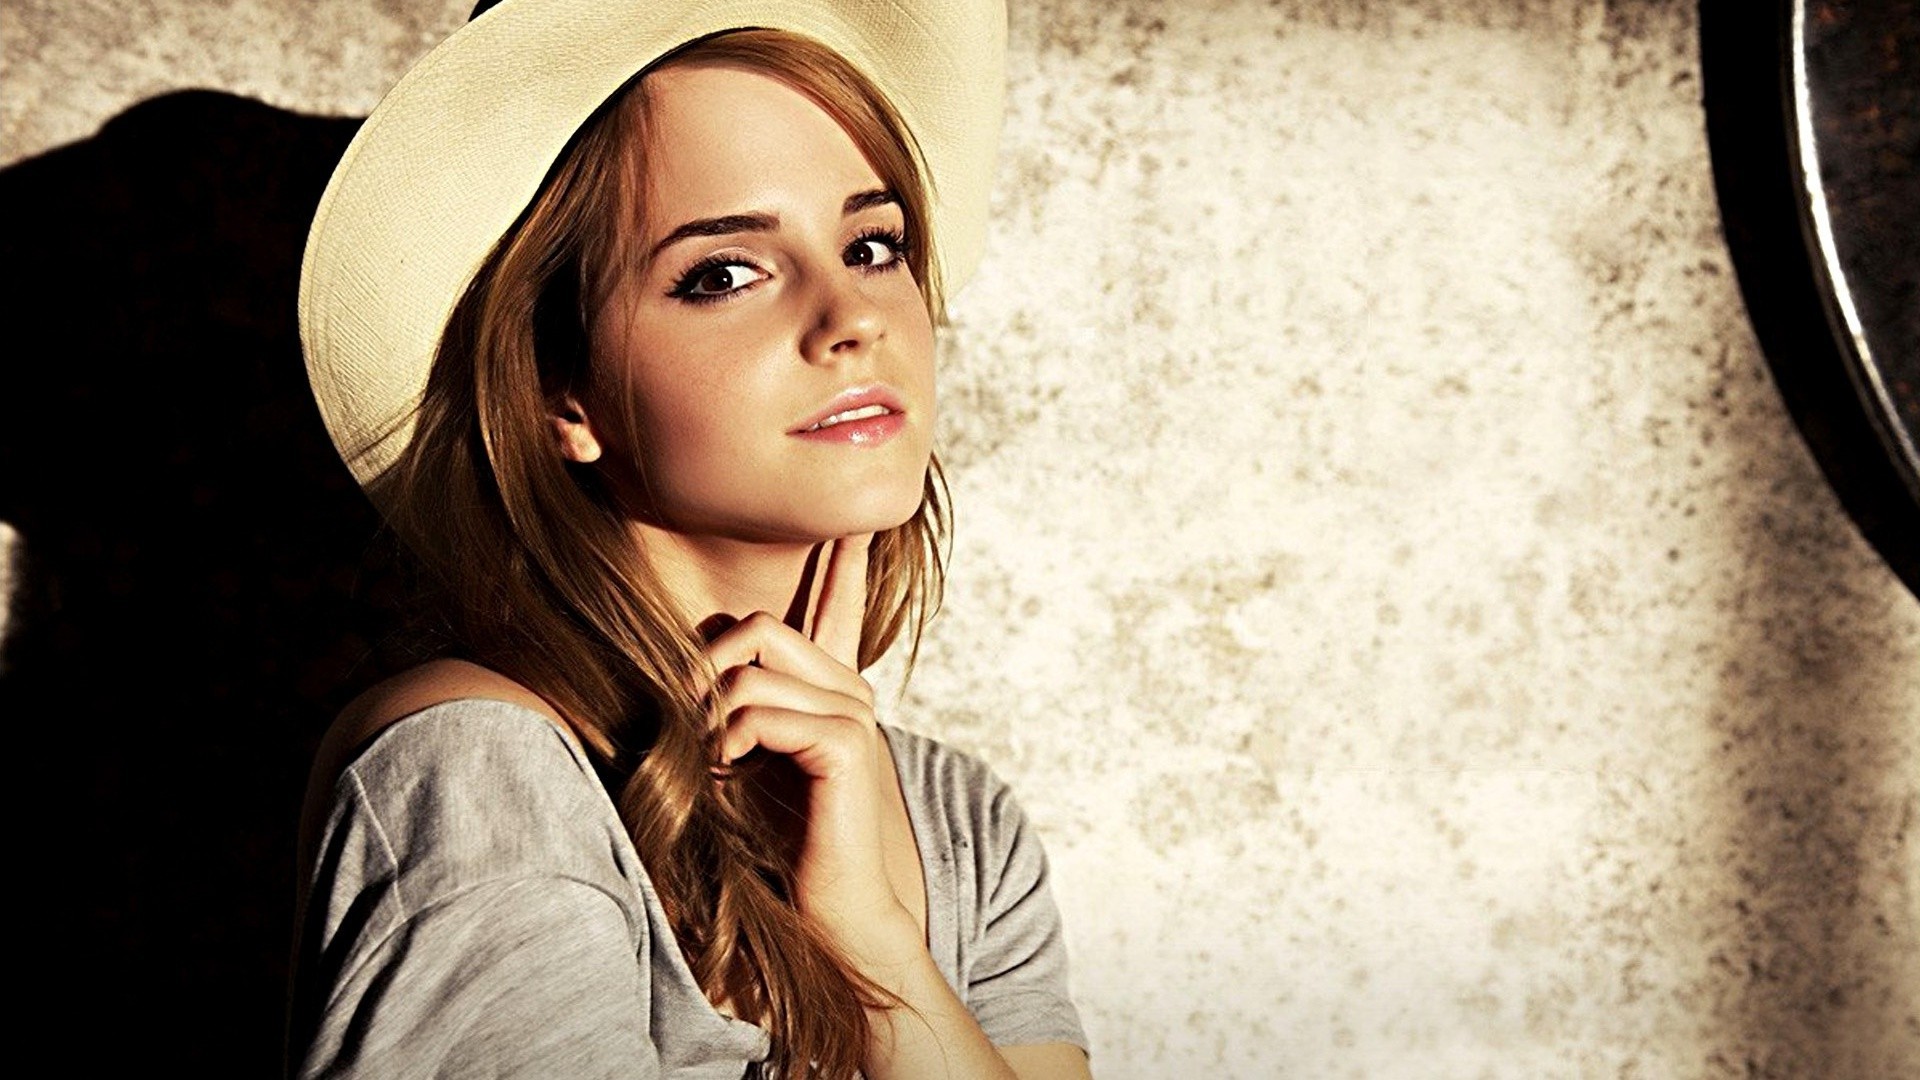 Emma Watson Wallpapers Free : Celebrities Wallpaper - Rakaruan.com